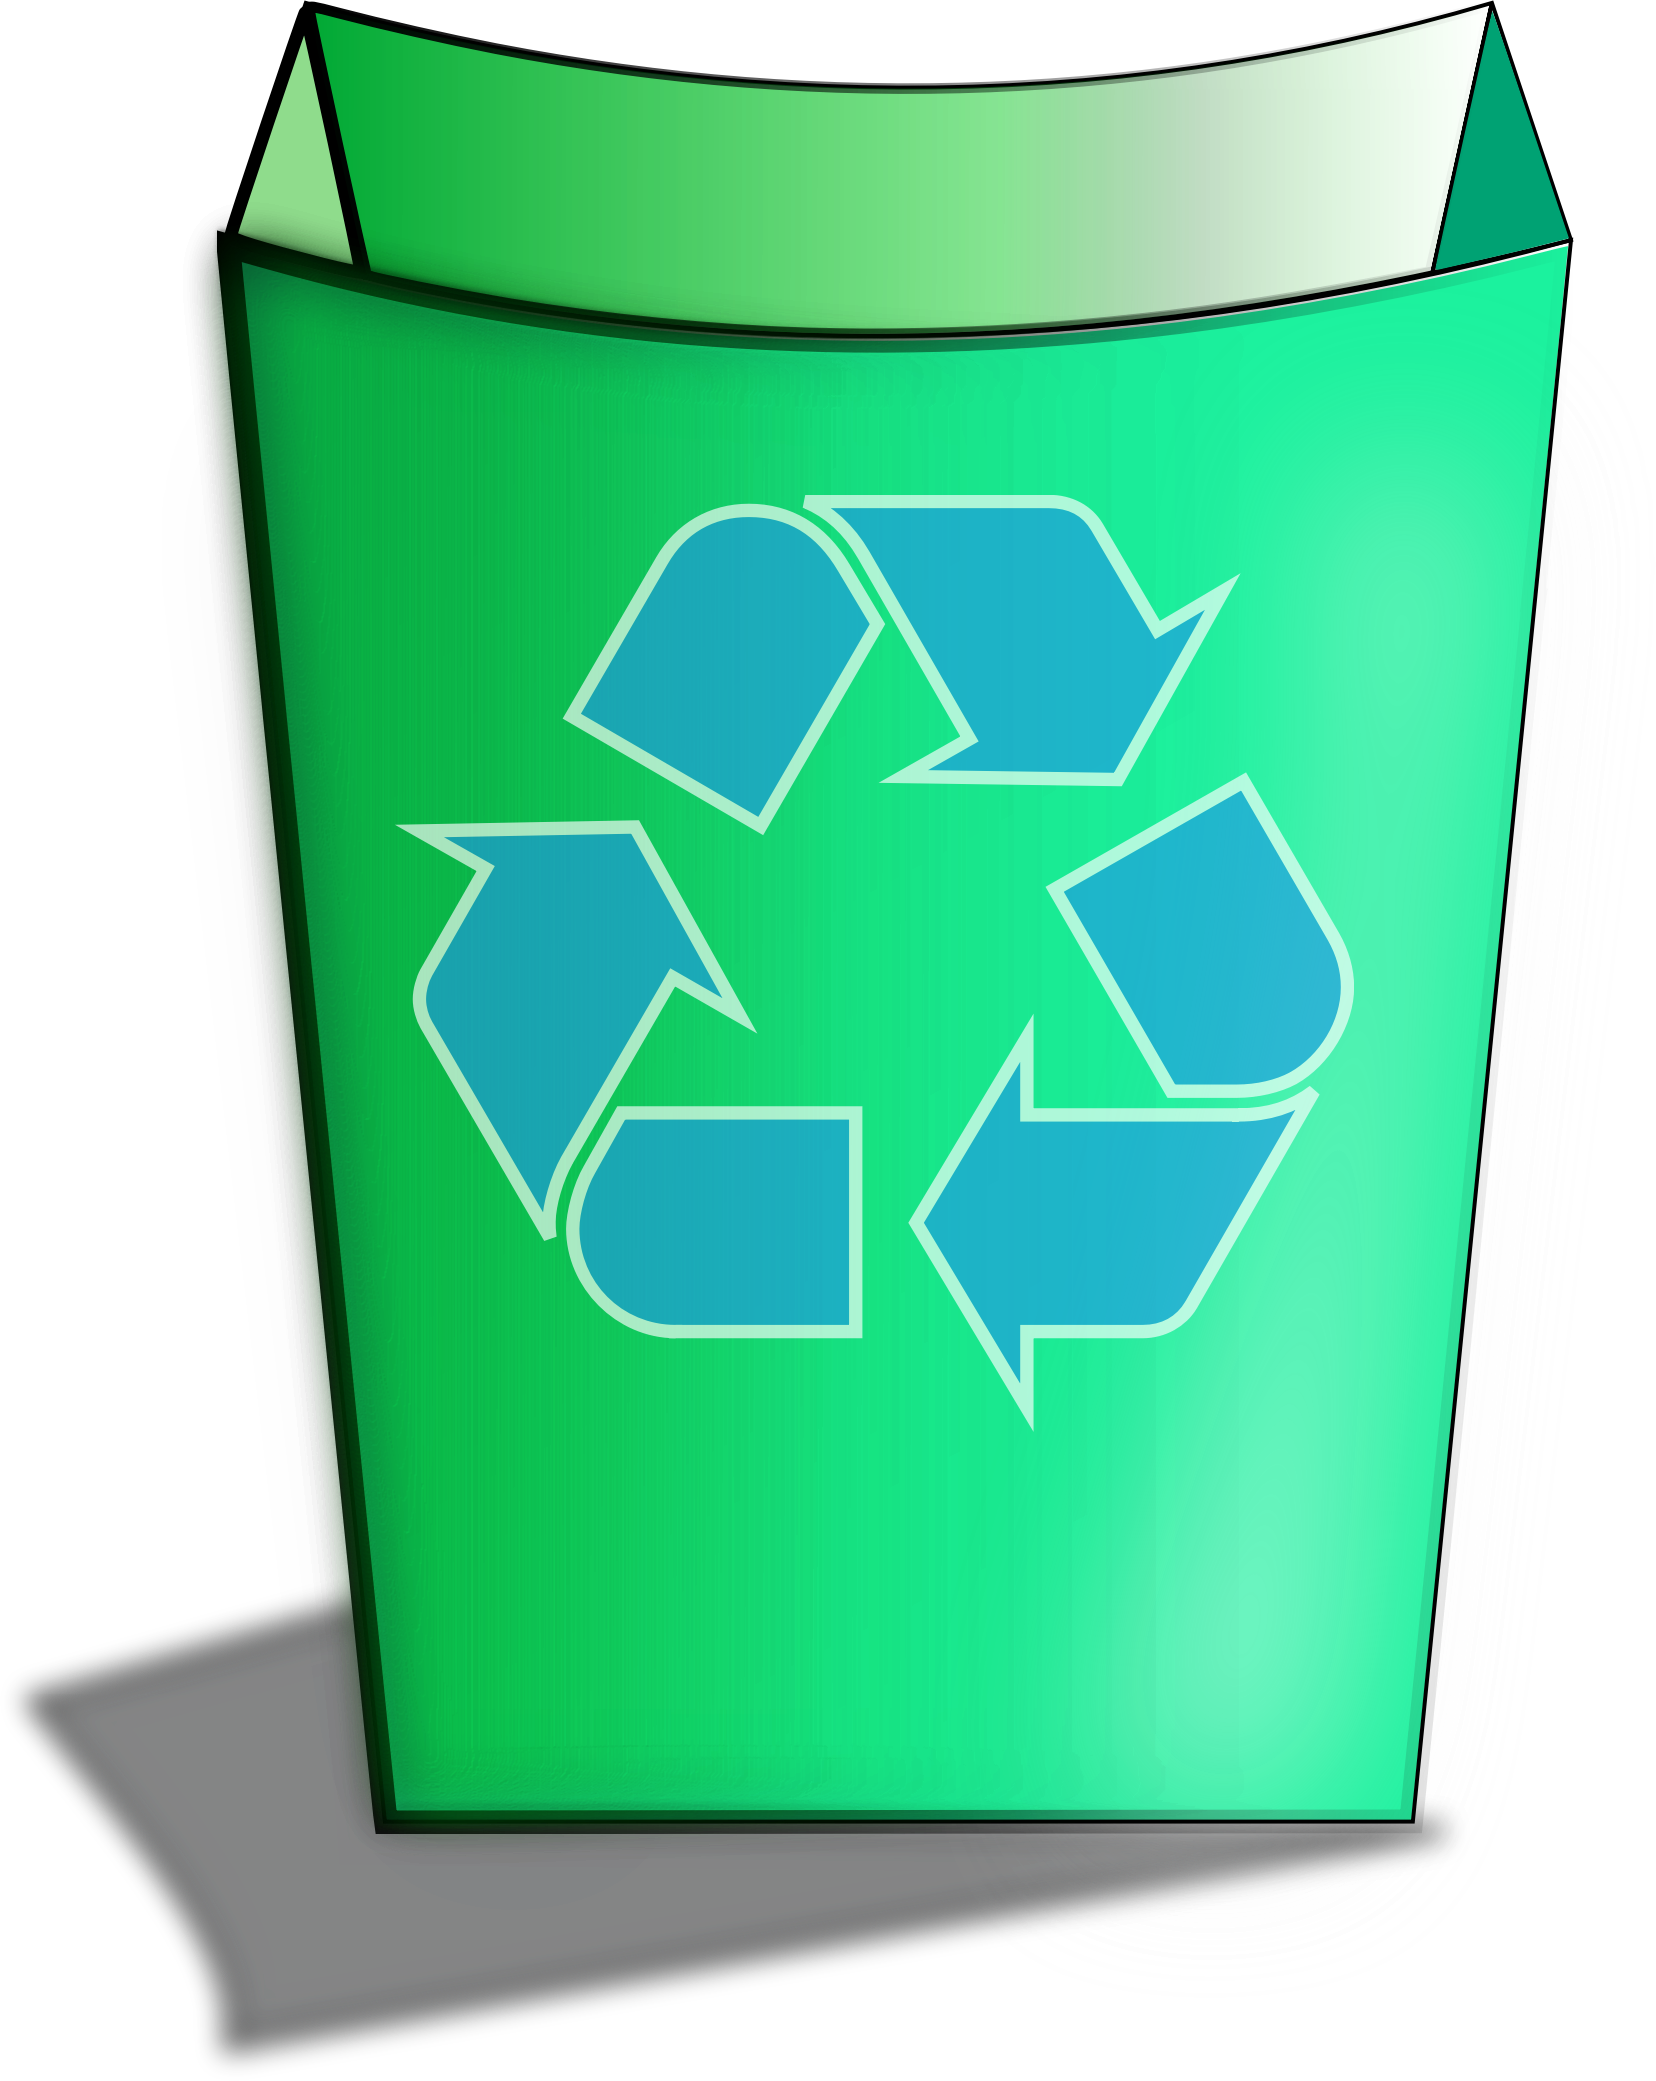 Recycling Bin Rubbish Bins & Waste Paper Baskets Green - Recycling Bin Rubbish Bins & Waste Paper Baskets Green (1656x2081)